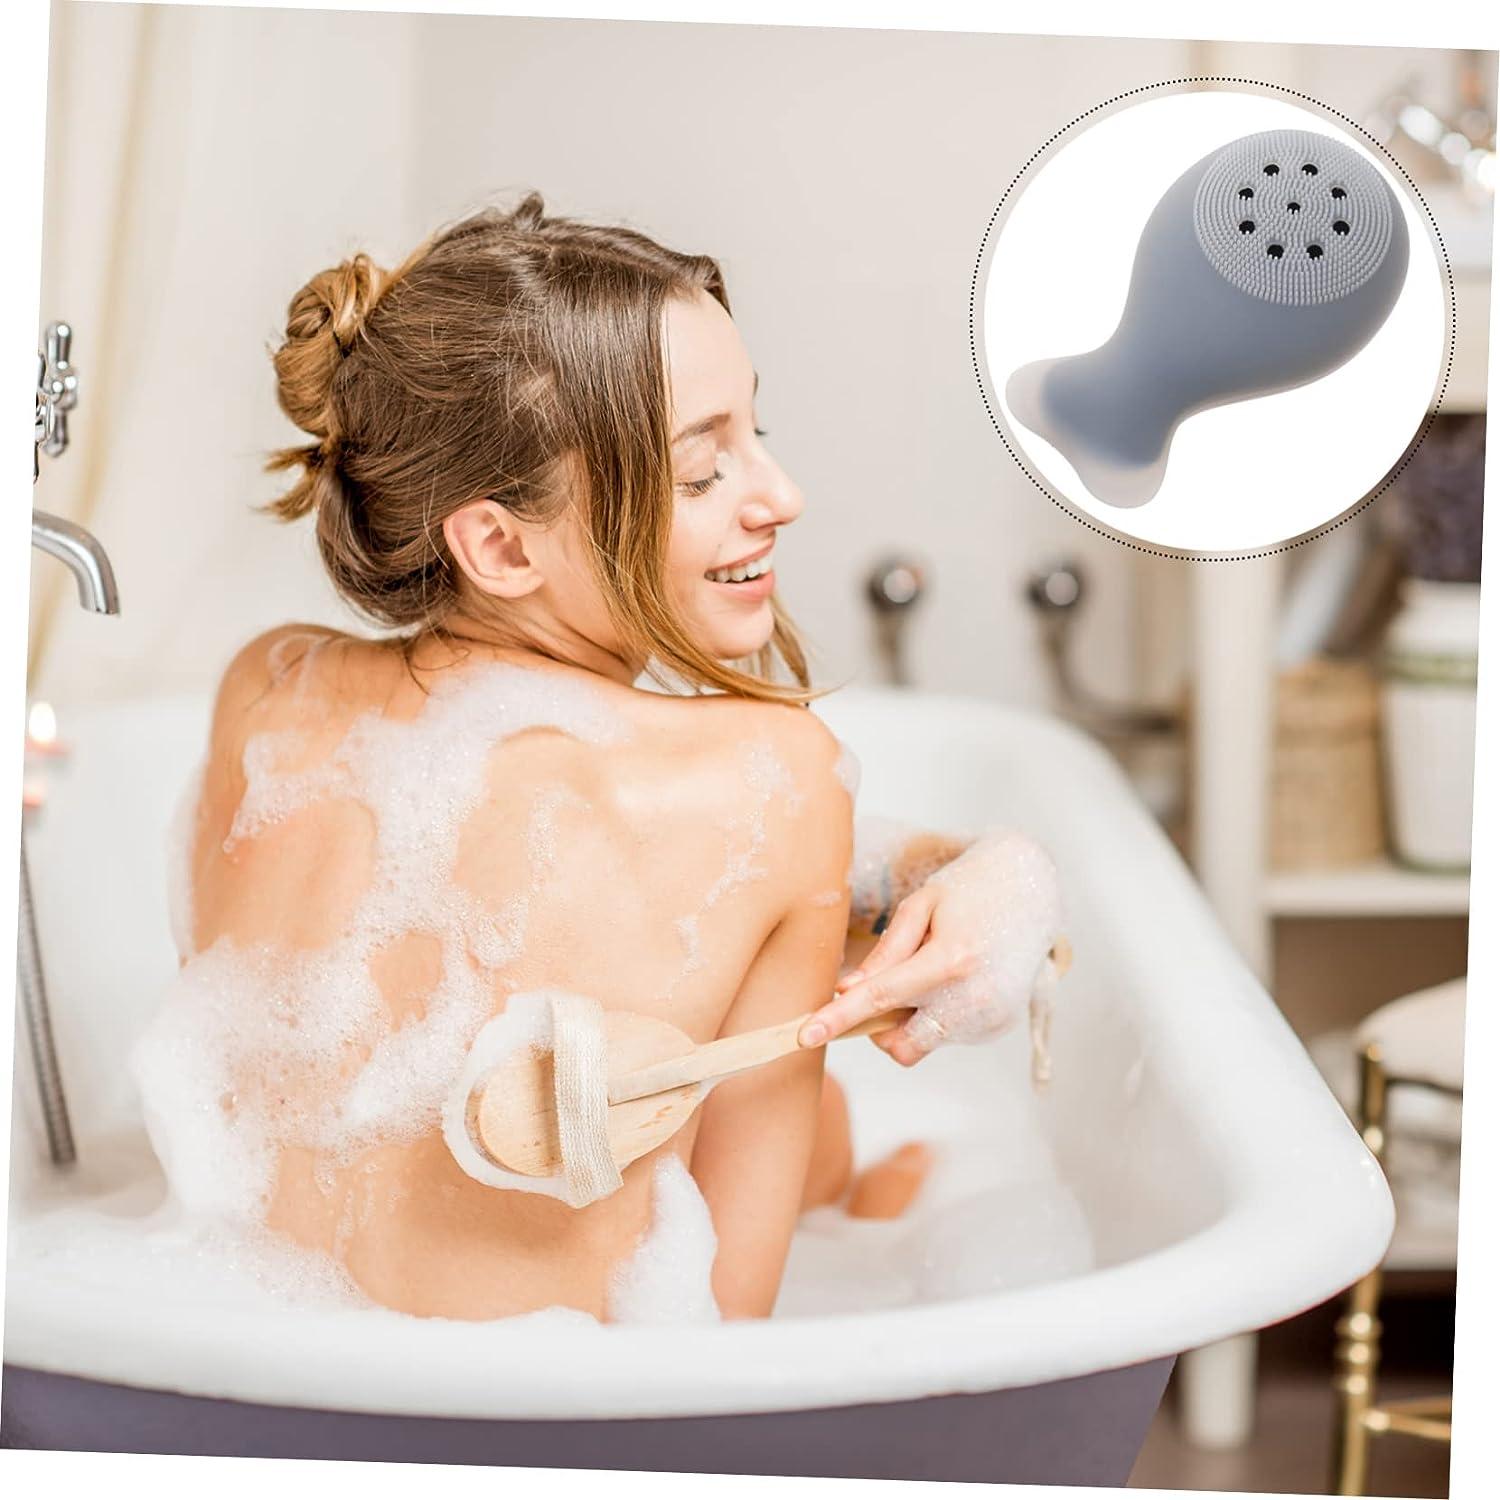 Silicone Body Scrubber Shower Exfoliating Scrub Sponge Bubble Bath Brush  Massager Bath Brush Skin Clean Shower Brushes Bathroom